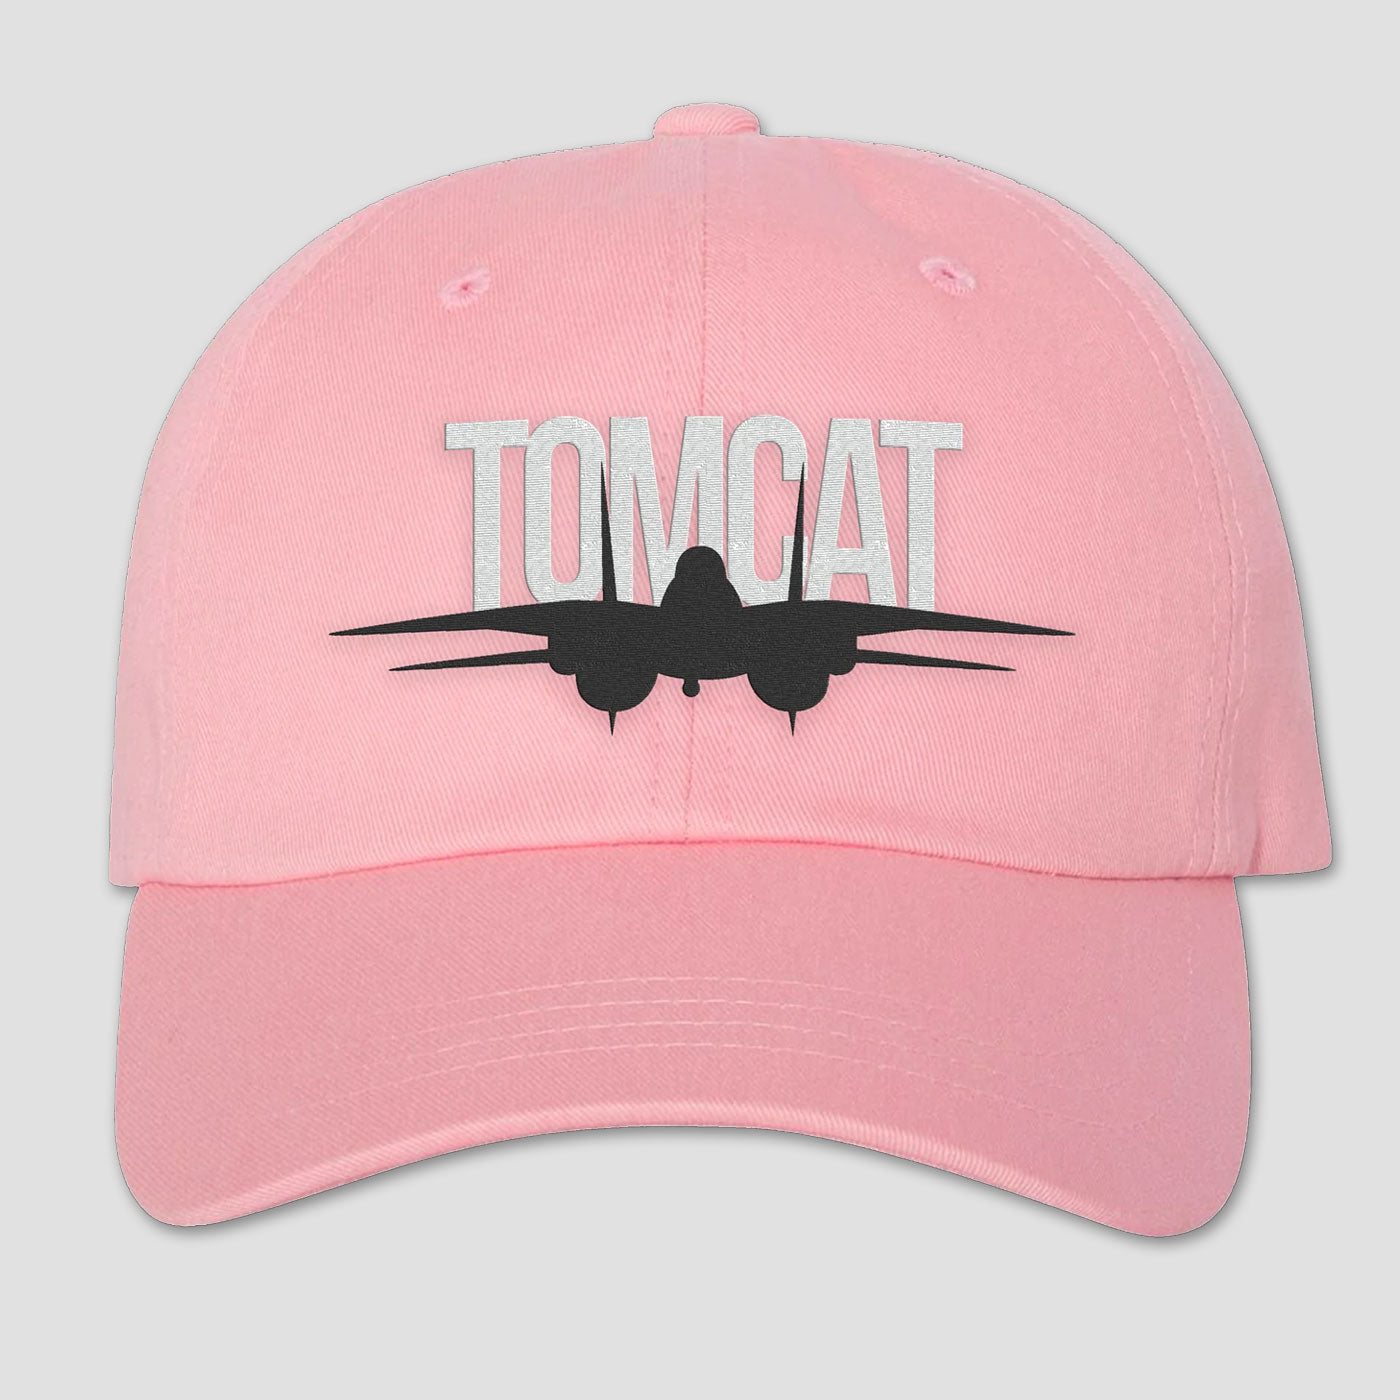 F-14 Tomcat Hats